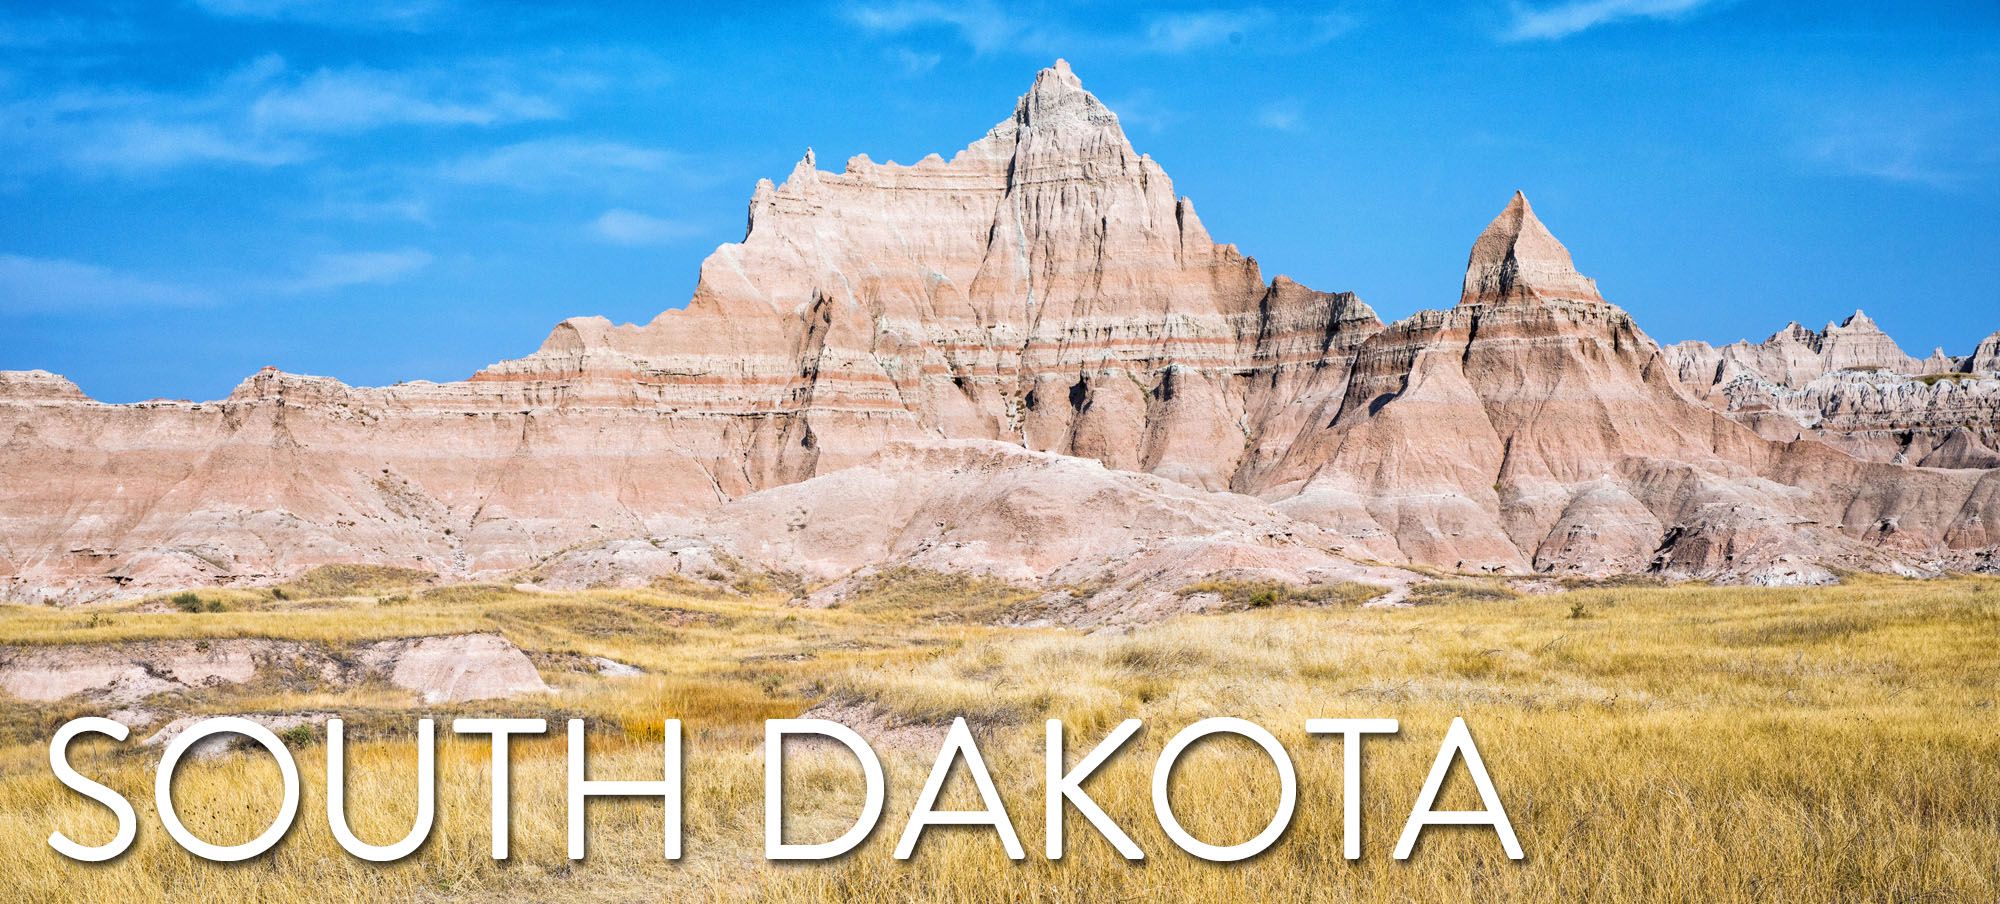 South Dakota Travel Guide